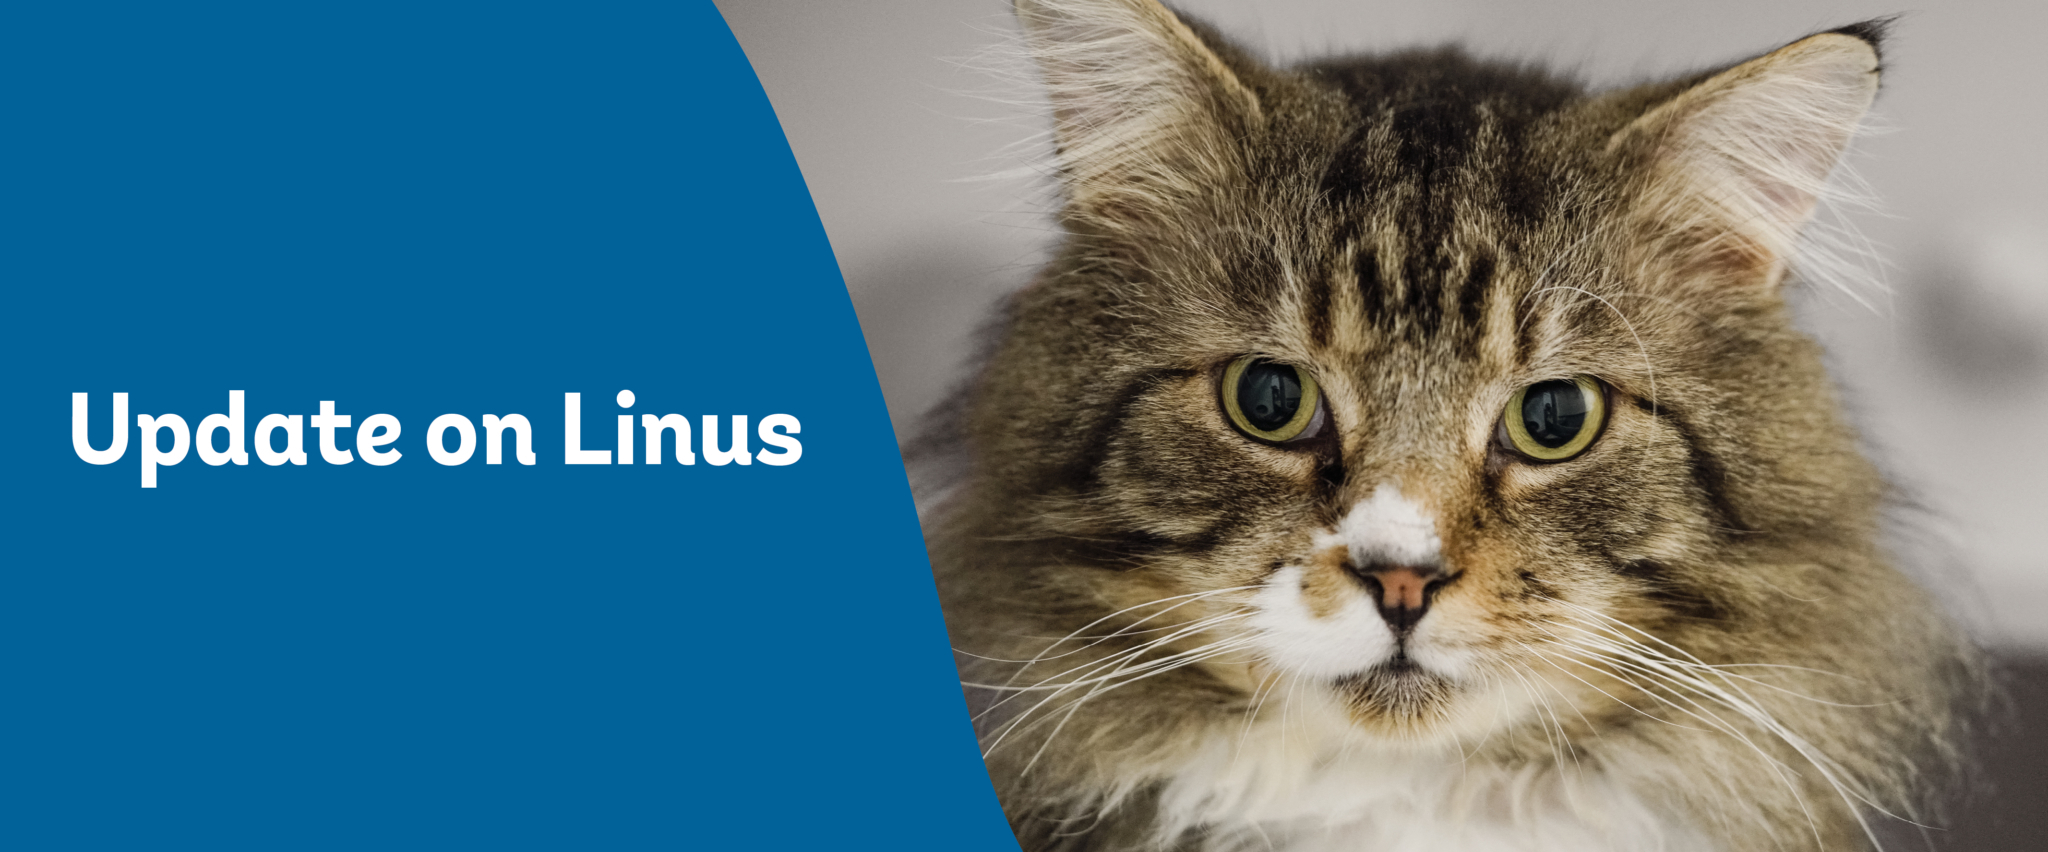 Web banner update on linus